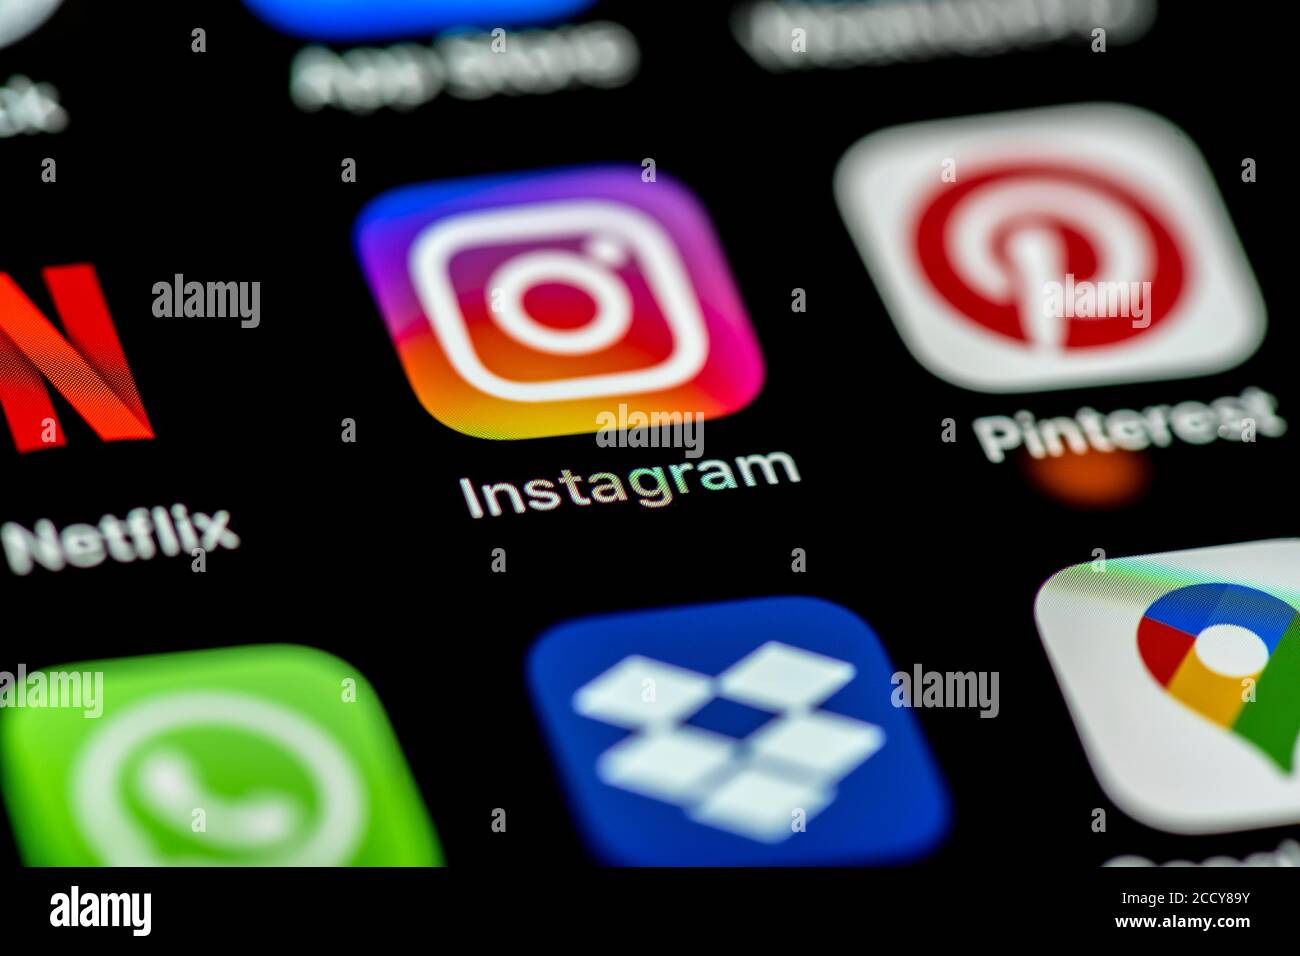 Instagram und Pinterest, Social Media, App-Icons auf dem Handy-Display, iPhone, Smartphone, Nahaufnahme, Vollbild Stockfoto